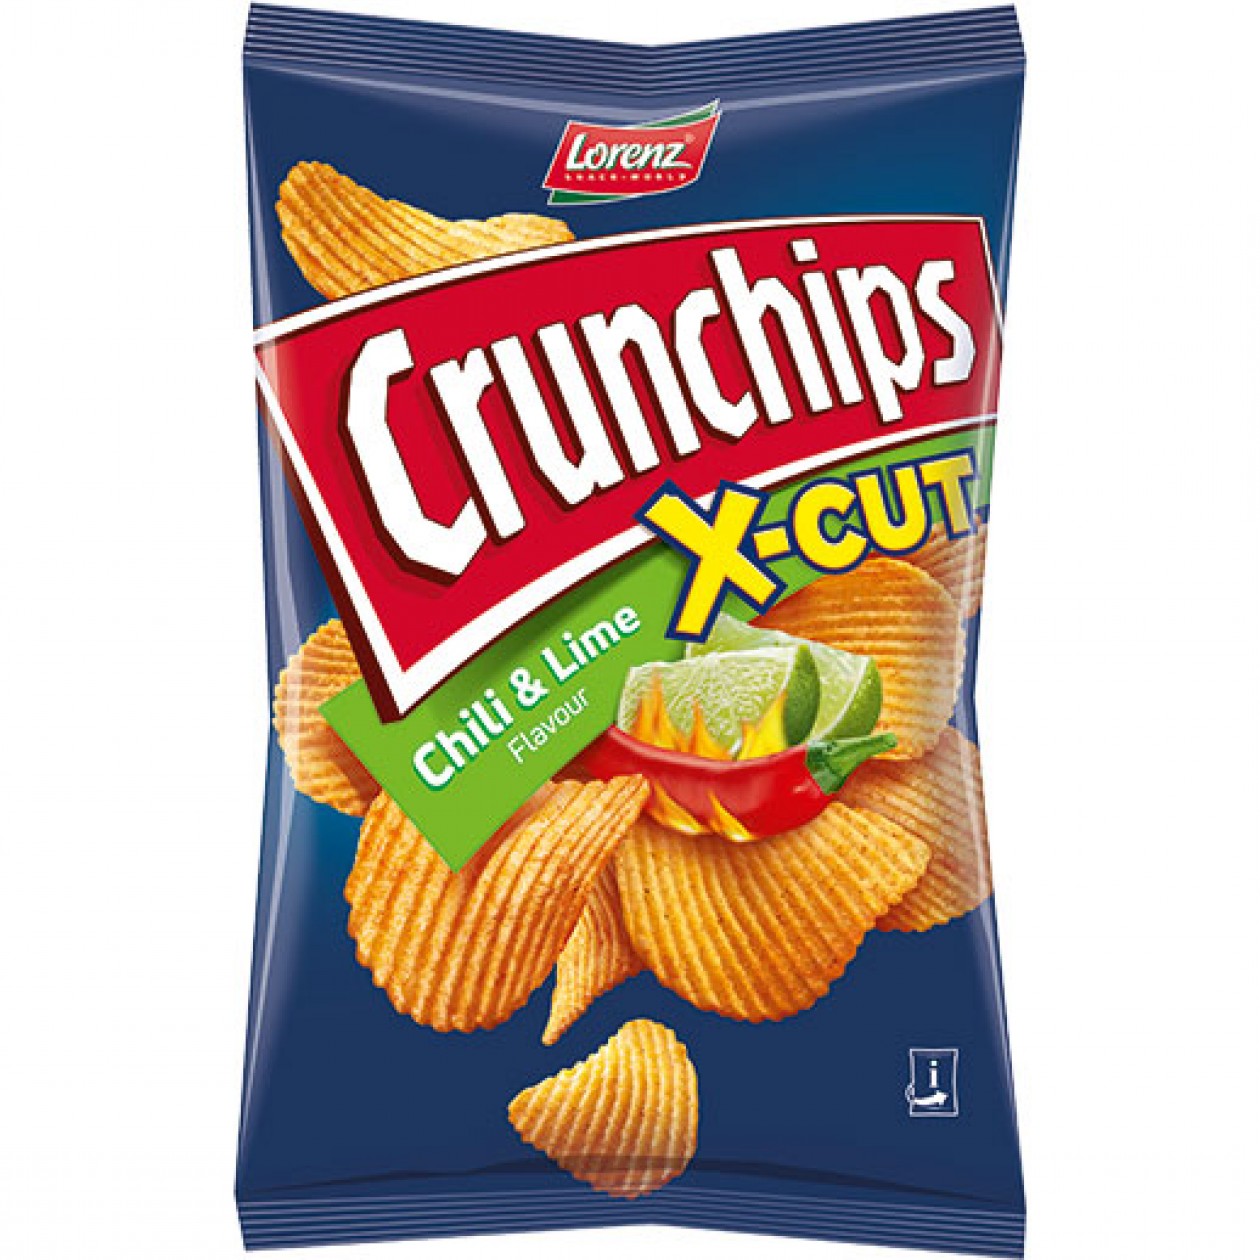 Crisps Crunchips X-Cut Chili & Lime 10x150g